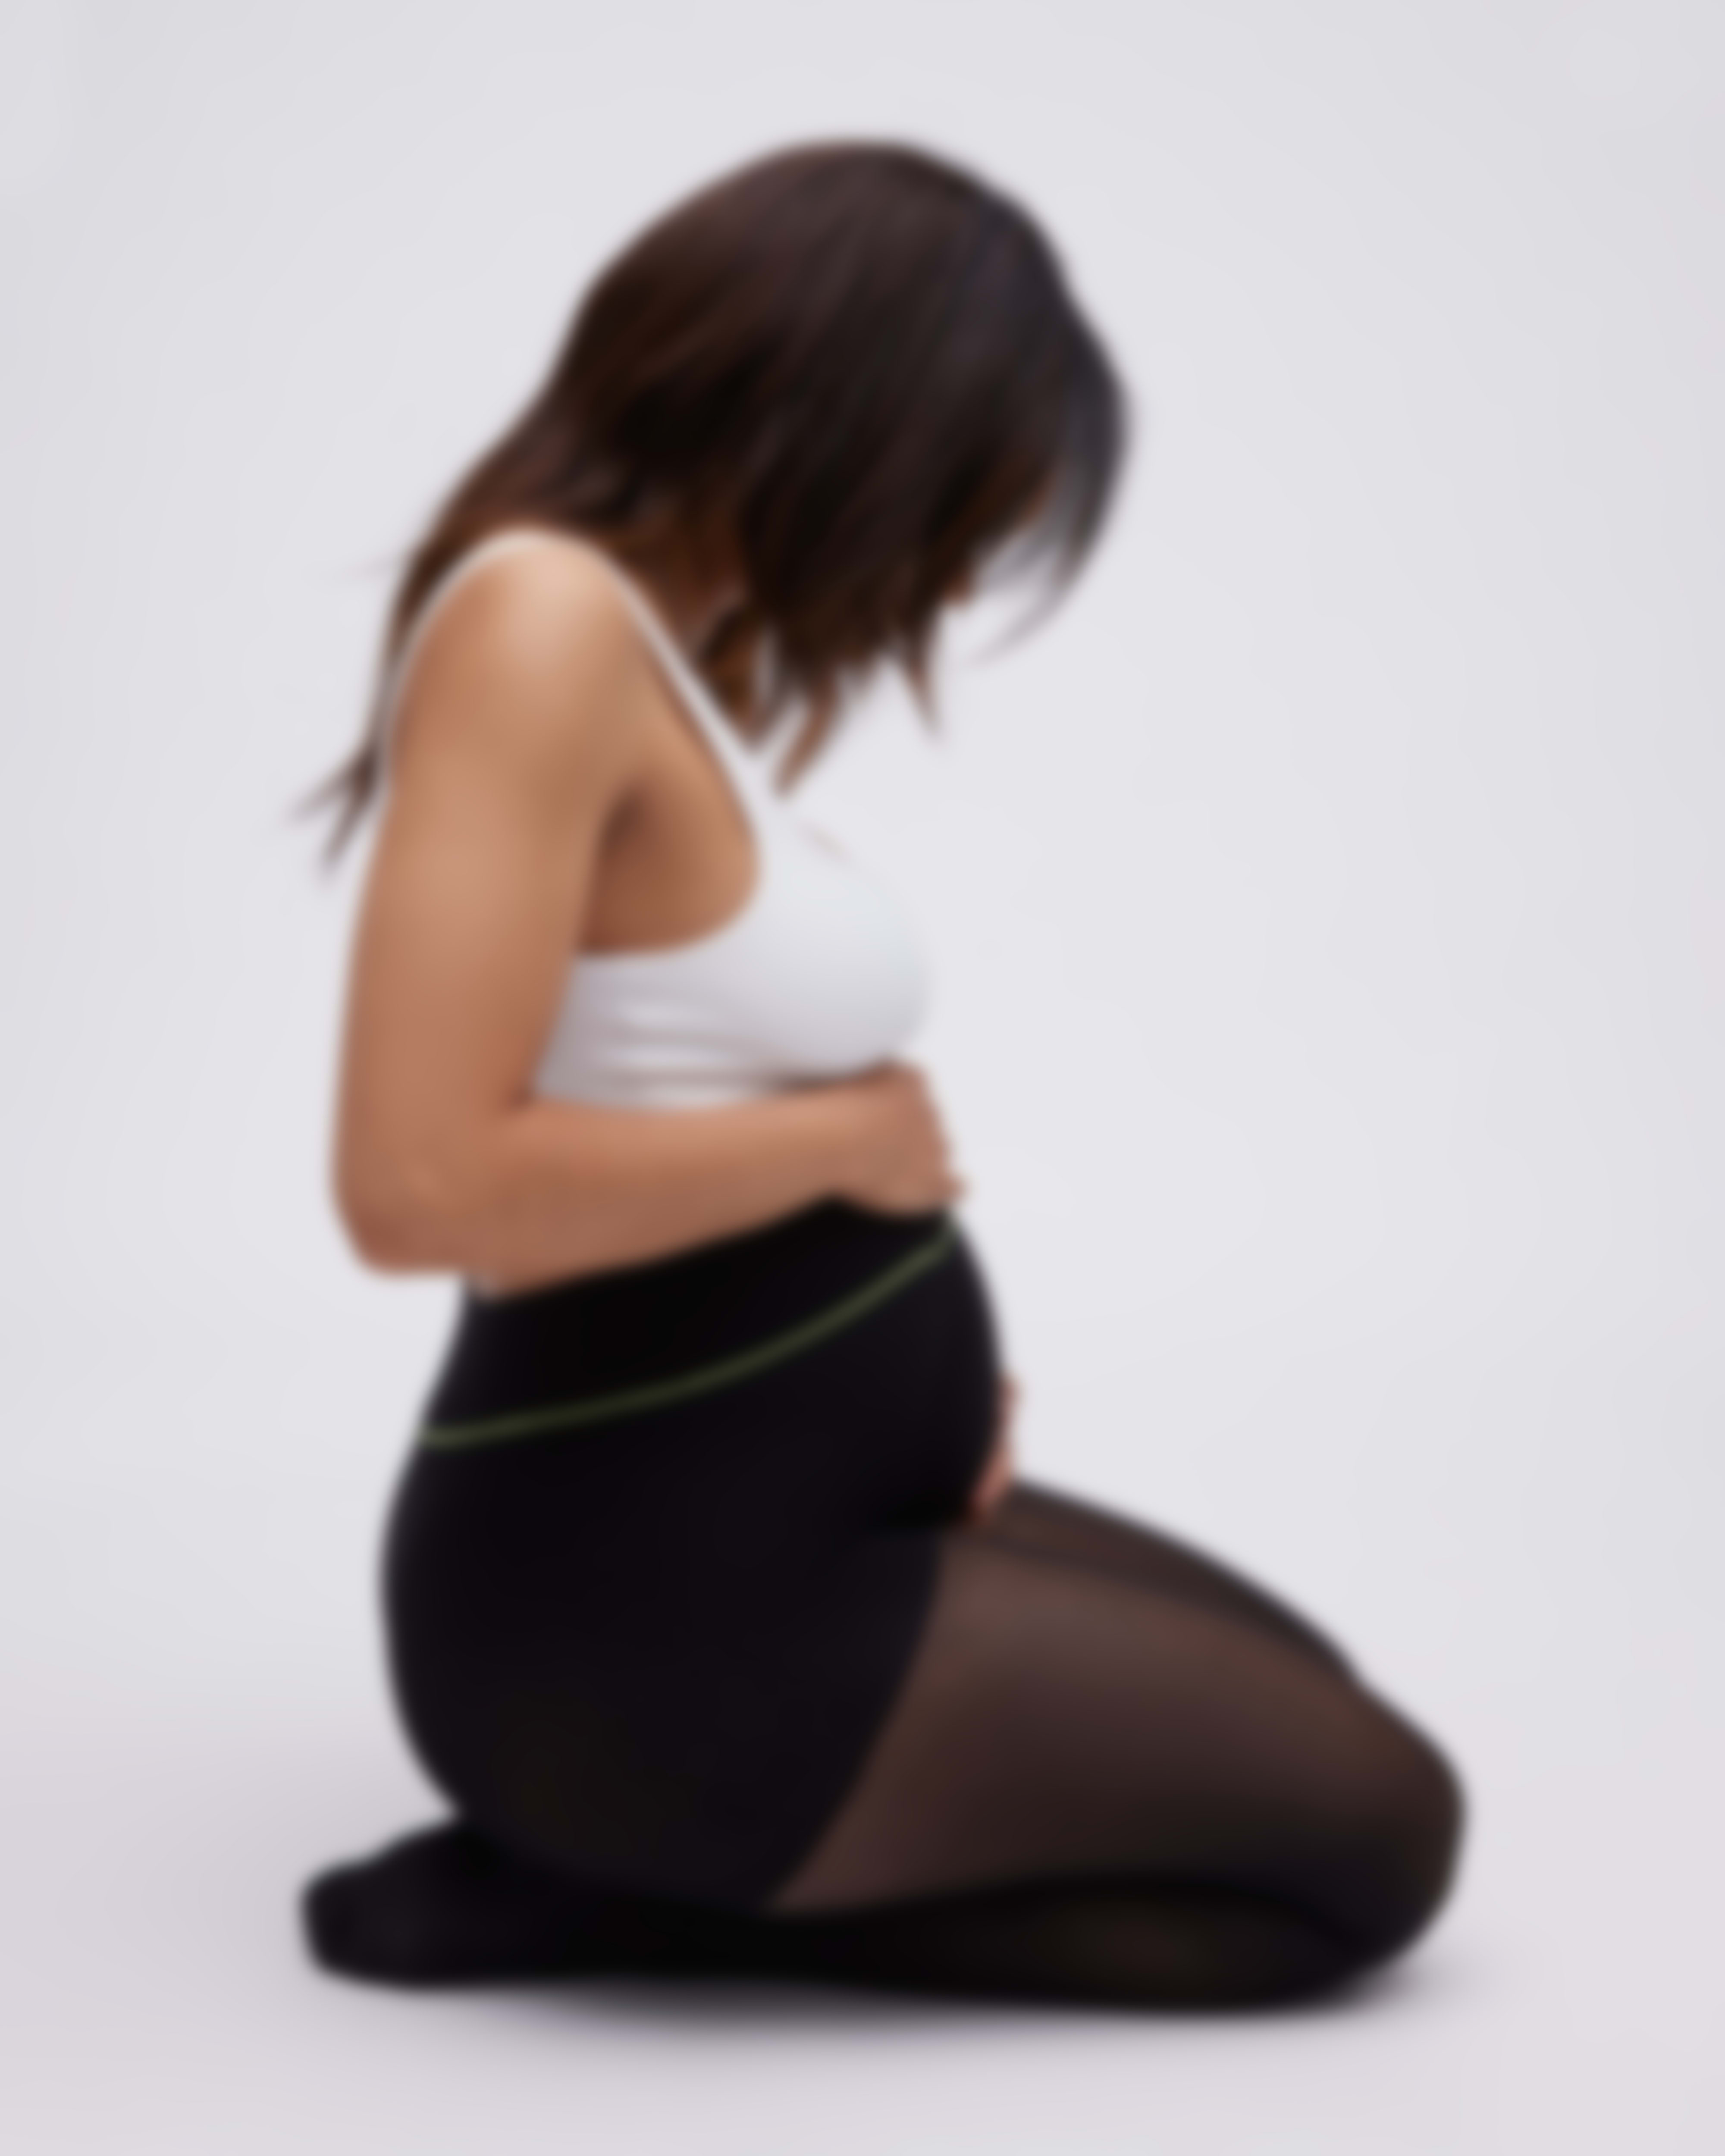 null, Maternity Sheer Rip-Resist Tights, maternity-sheer-tights, sheertex, product image, unbreakable tights, model